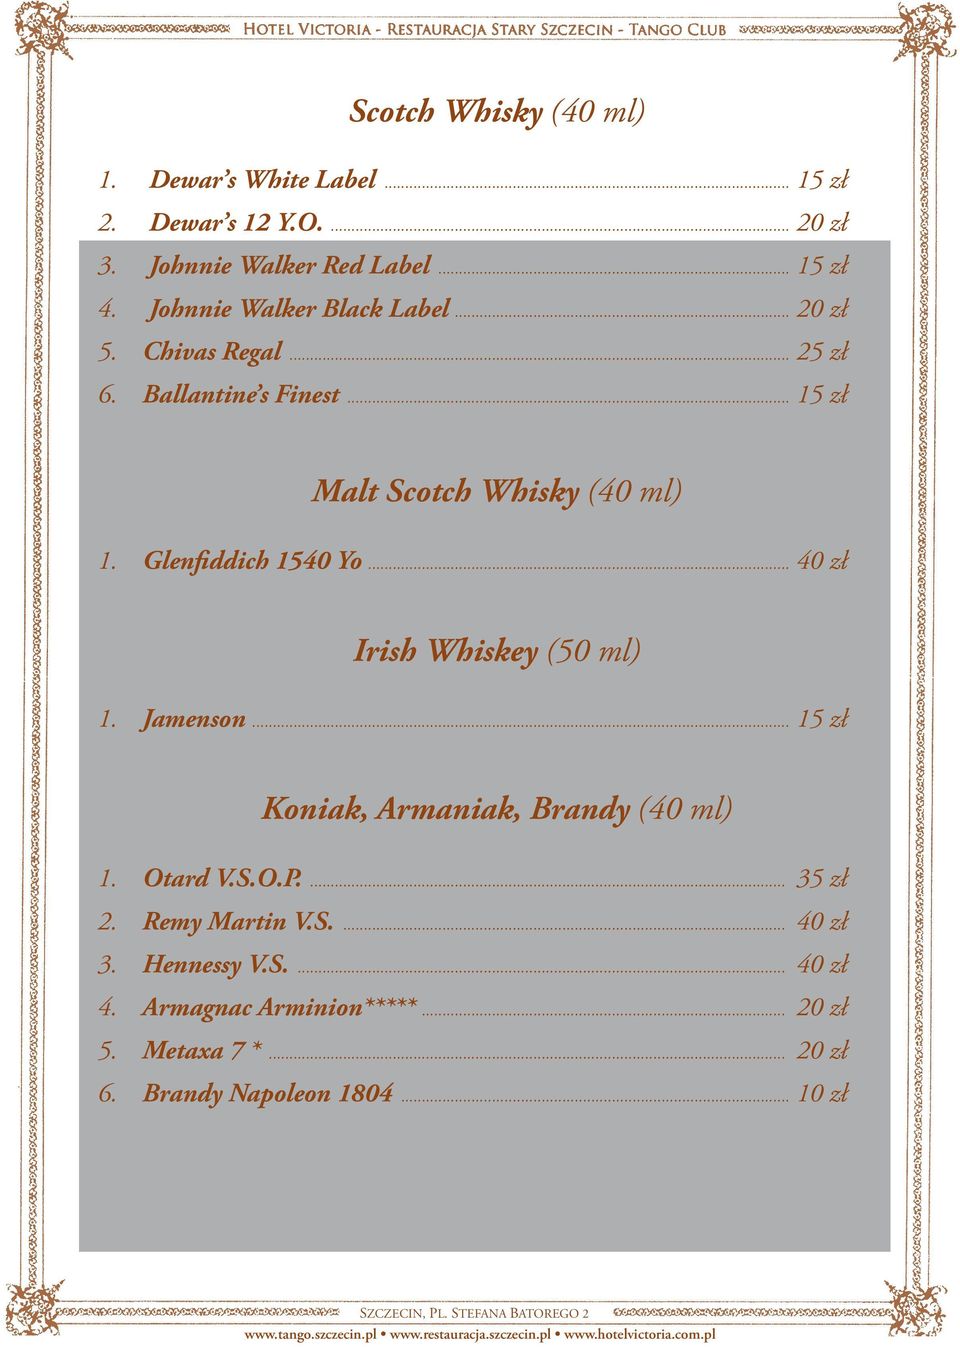 Glenfiddich 1540 Yo... 40 zł Irish Whiskey (50 ml) 1. Jamenson... 15 zł Koniak, Armaniak, Brandy (40 ml) 1. Otard V.S.O.P.... 35 zł 2.